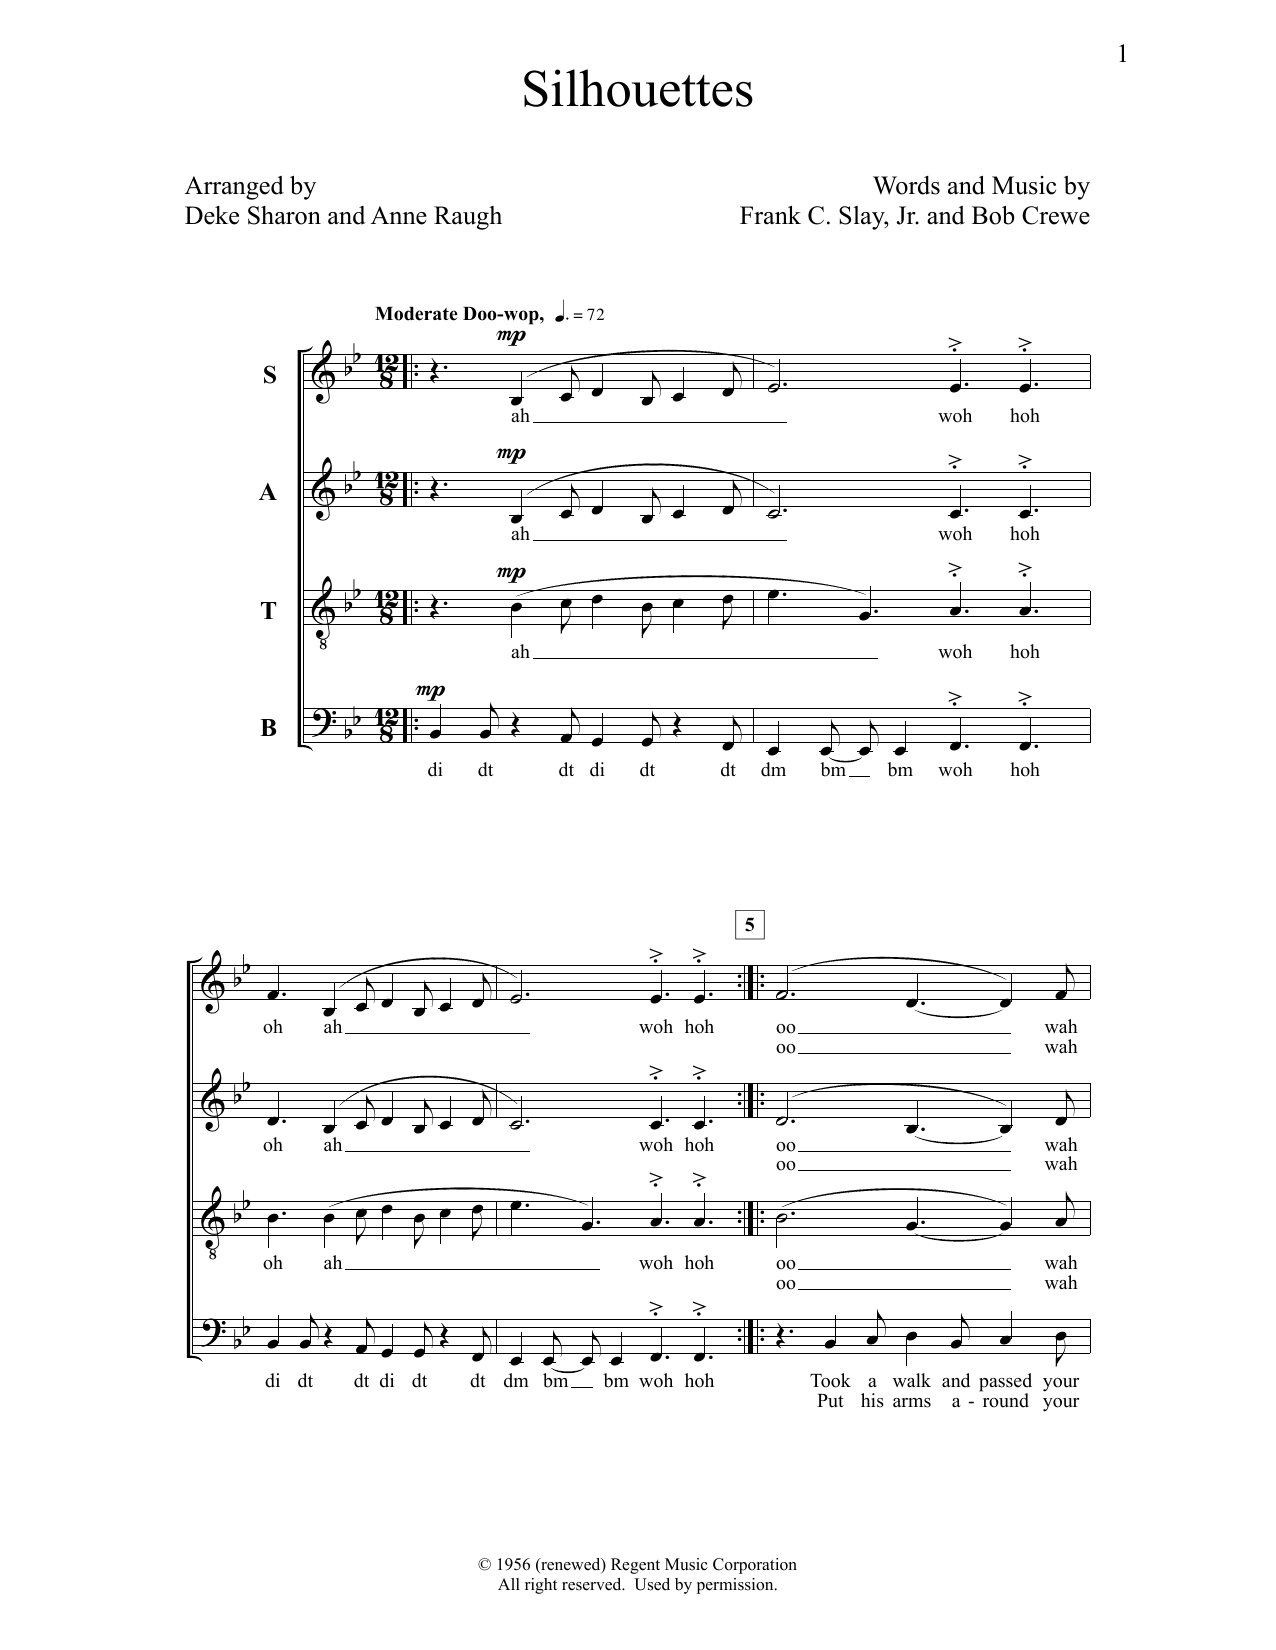 Deke Sharon Silhouettes sheet music notes and chords arranged for SATB Choir